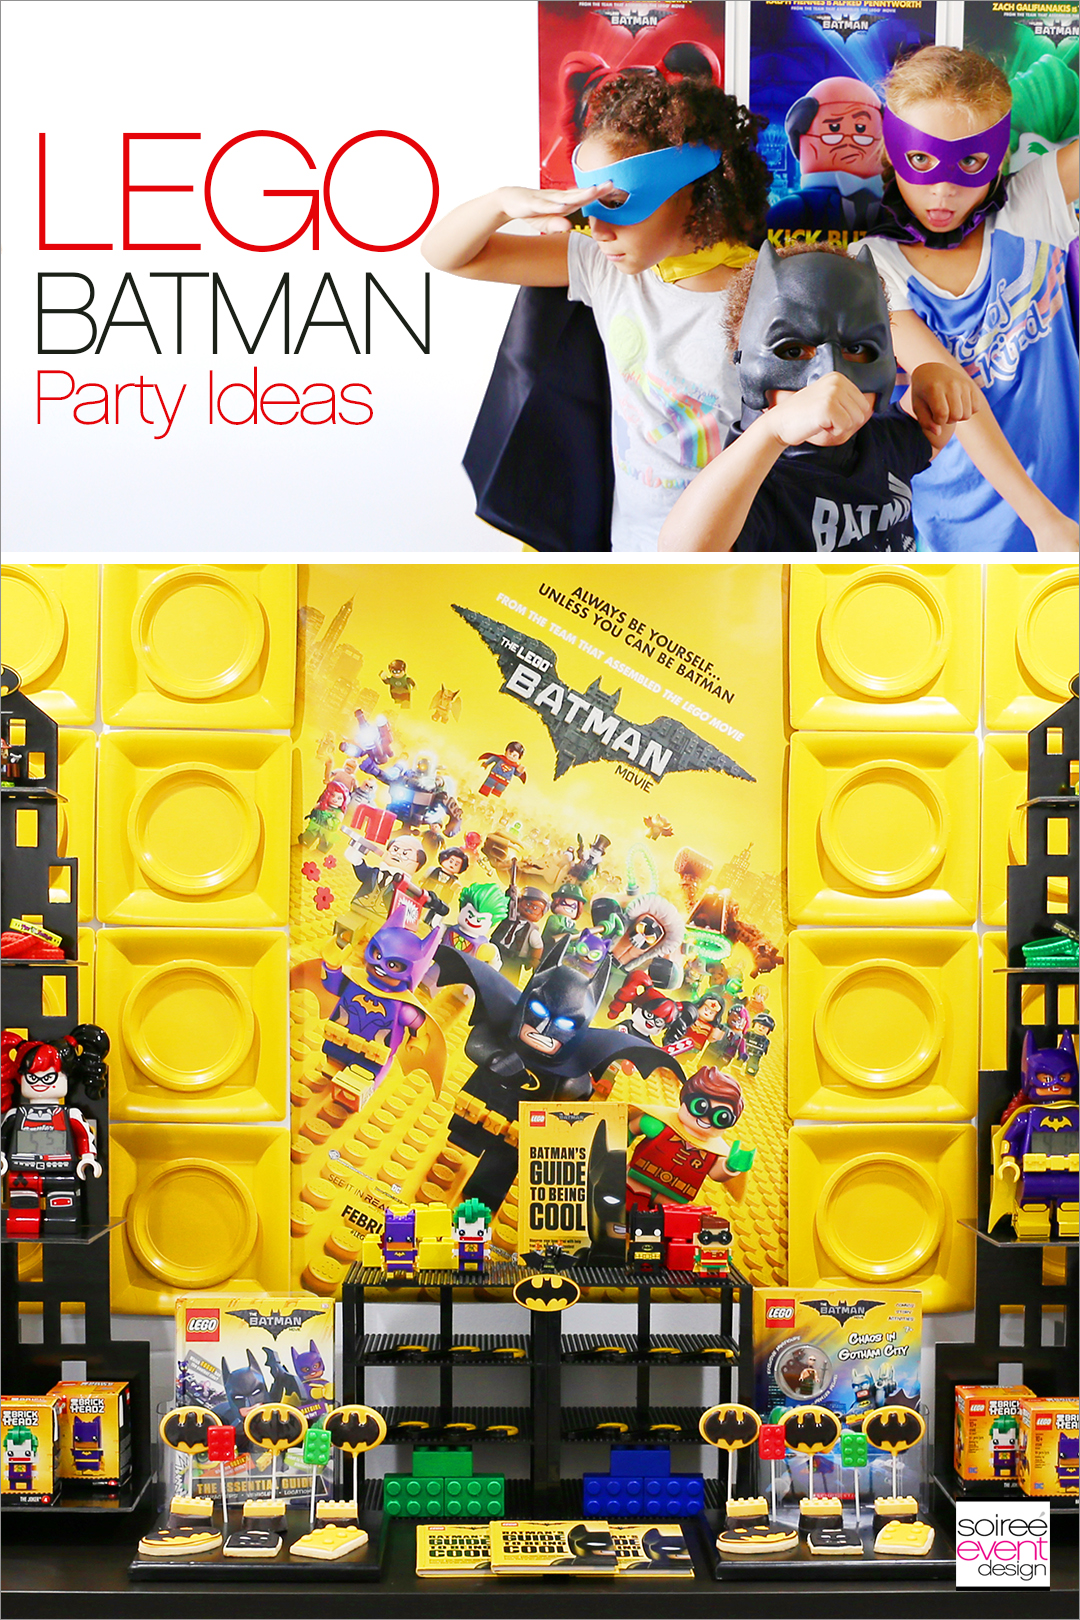 Lego Batman Party Ideas - Soiree Event Design